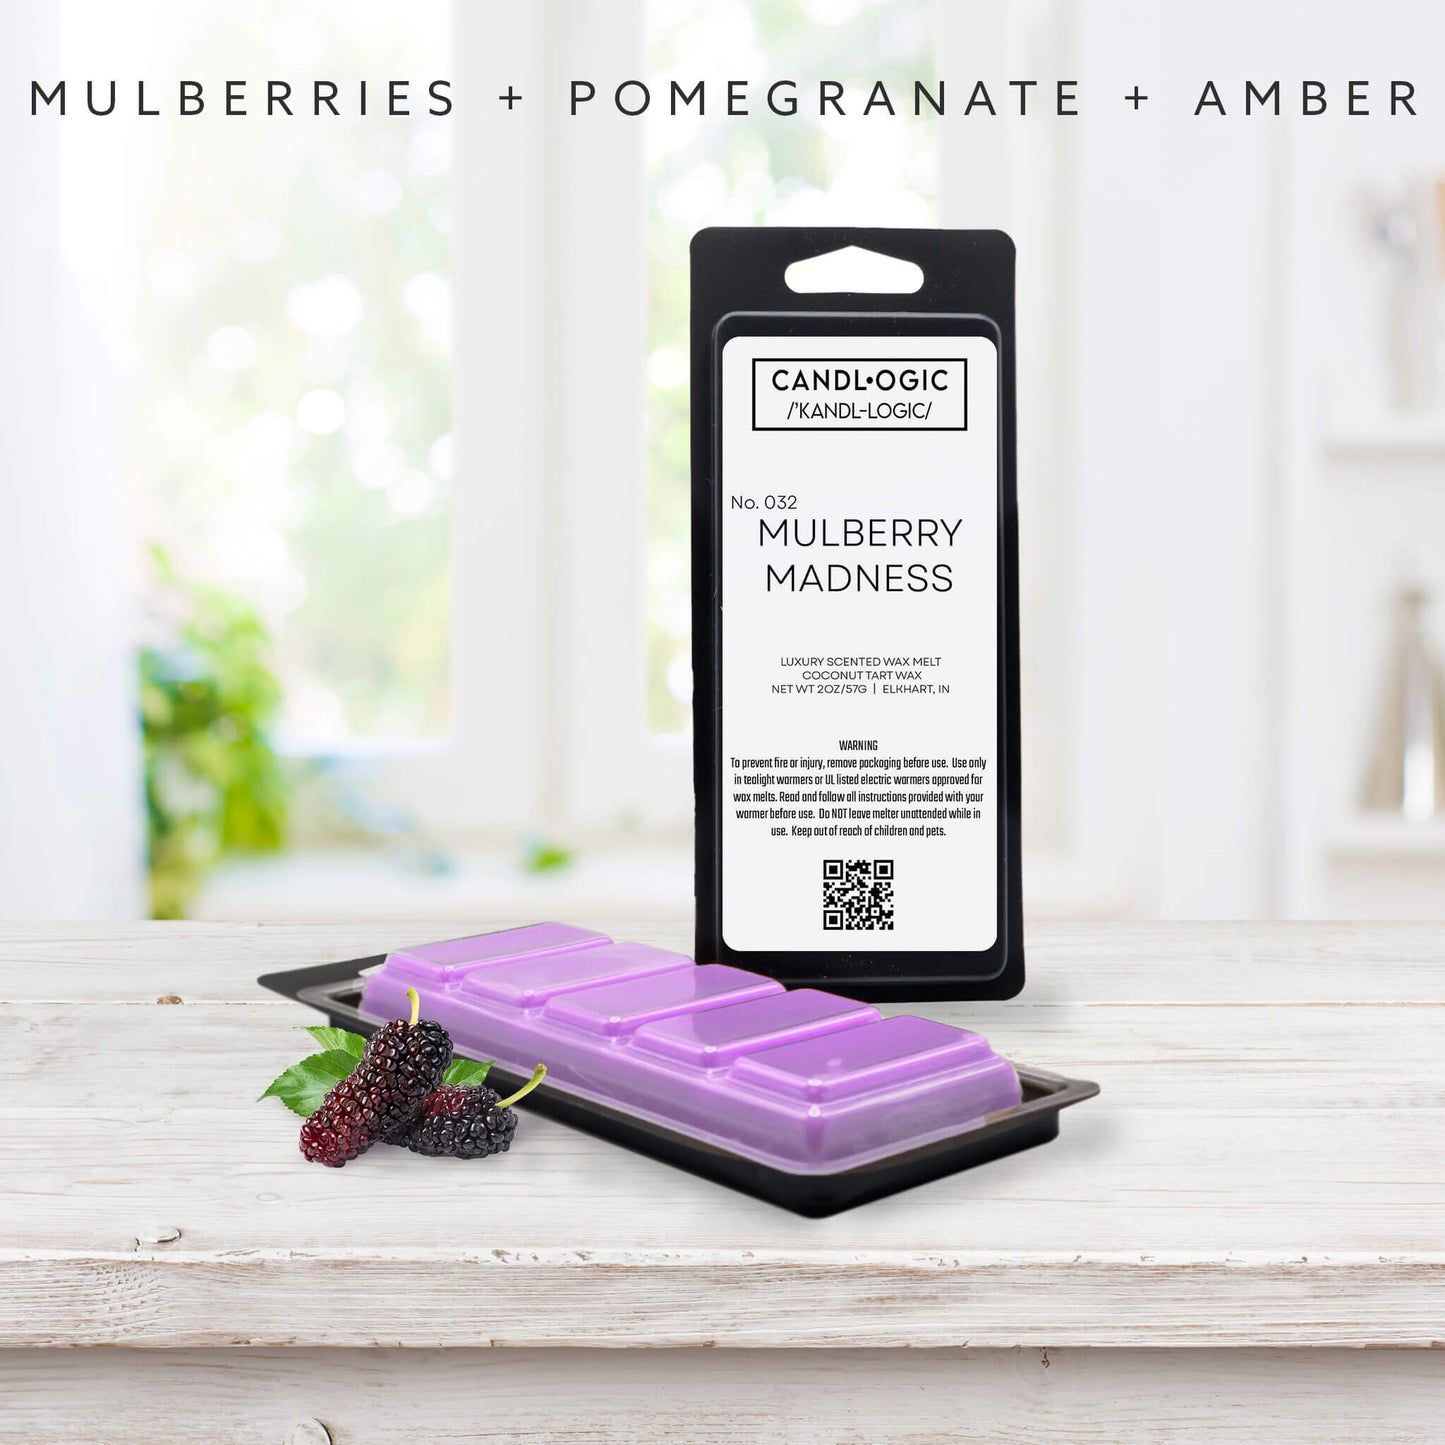 No. 032 Mulberry Madness wax melt - Mulberries, Pomegranate & Amber